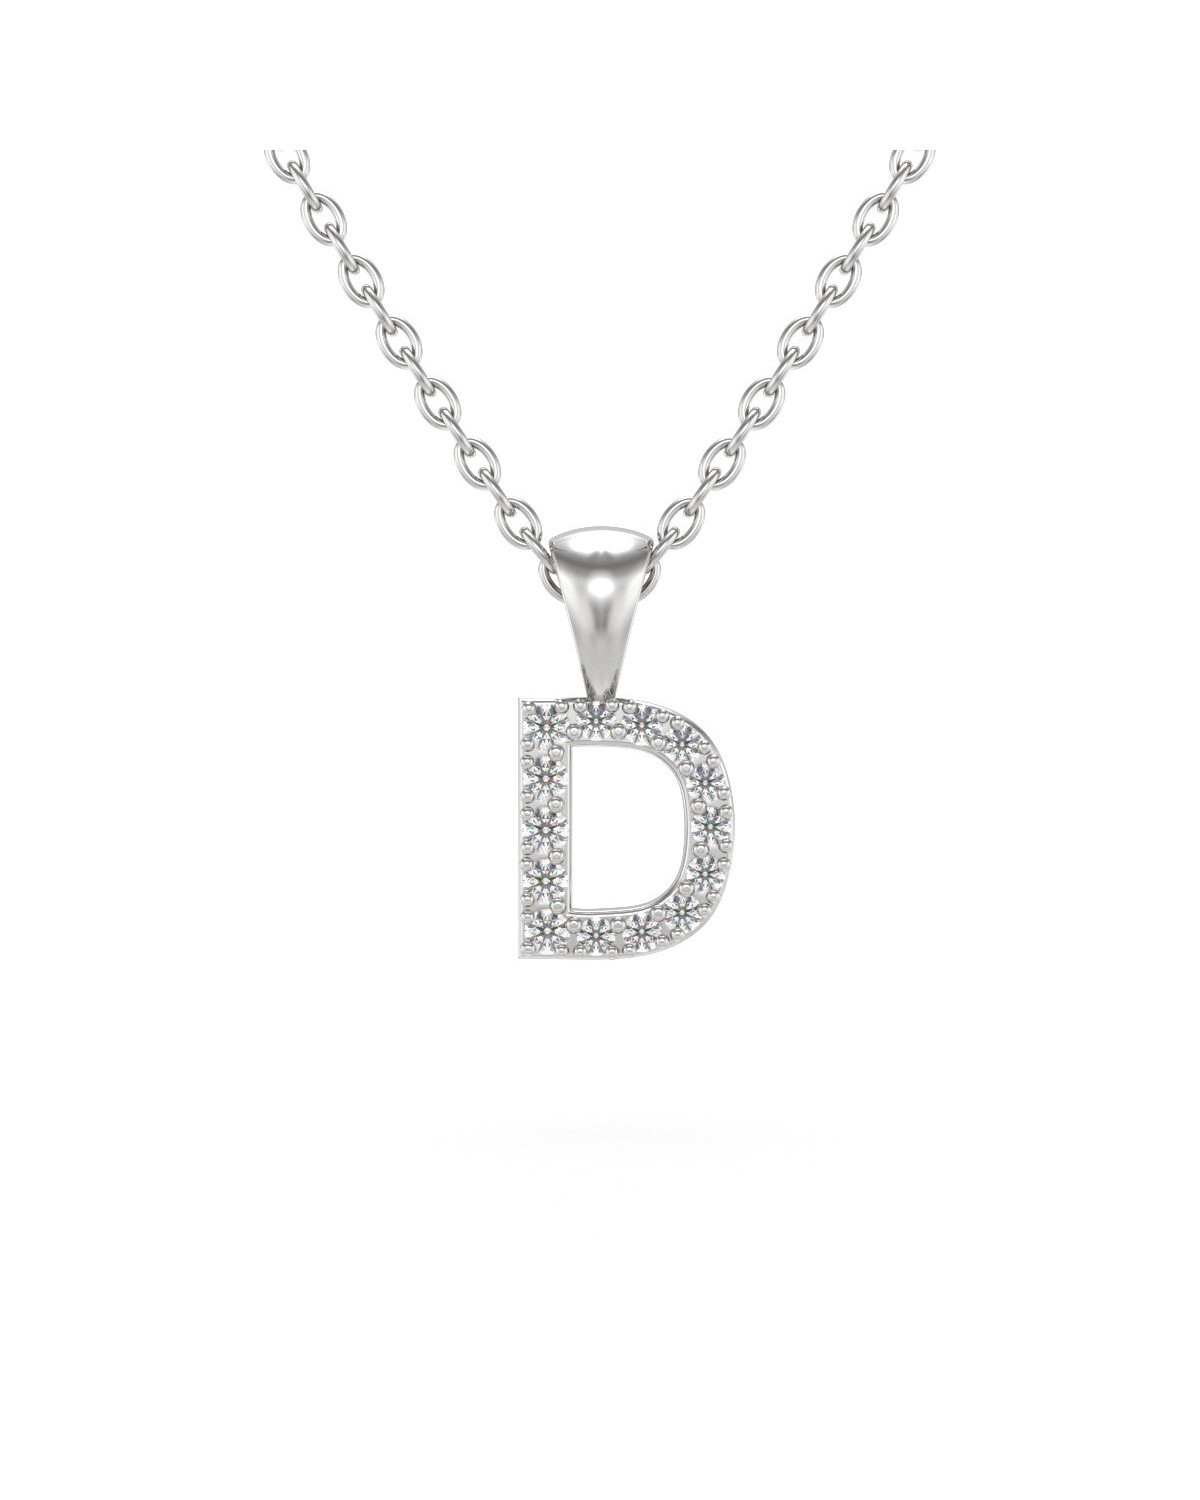 Collier Pendentif Lettre D Or Blanc Diamant Chaine Or incluse 0.72grs